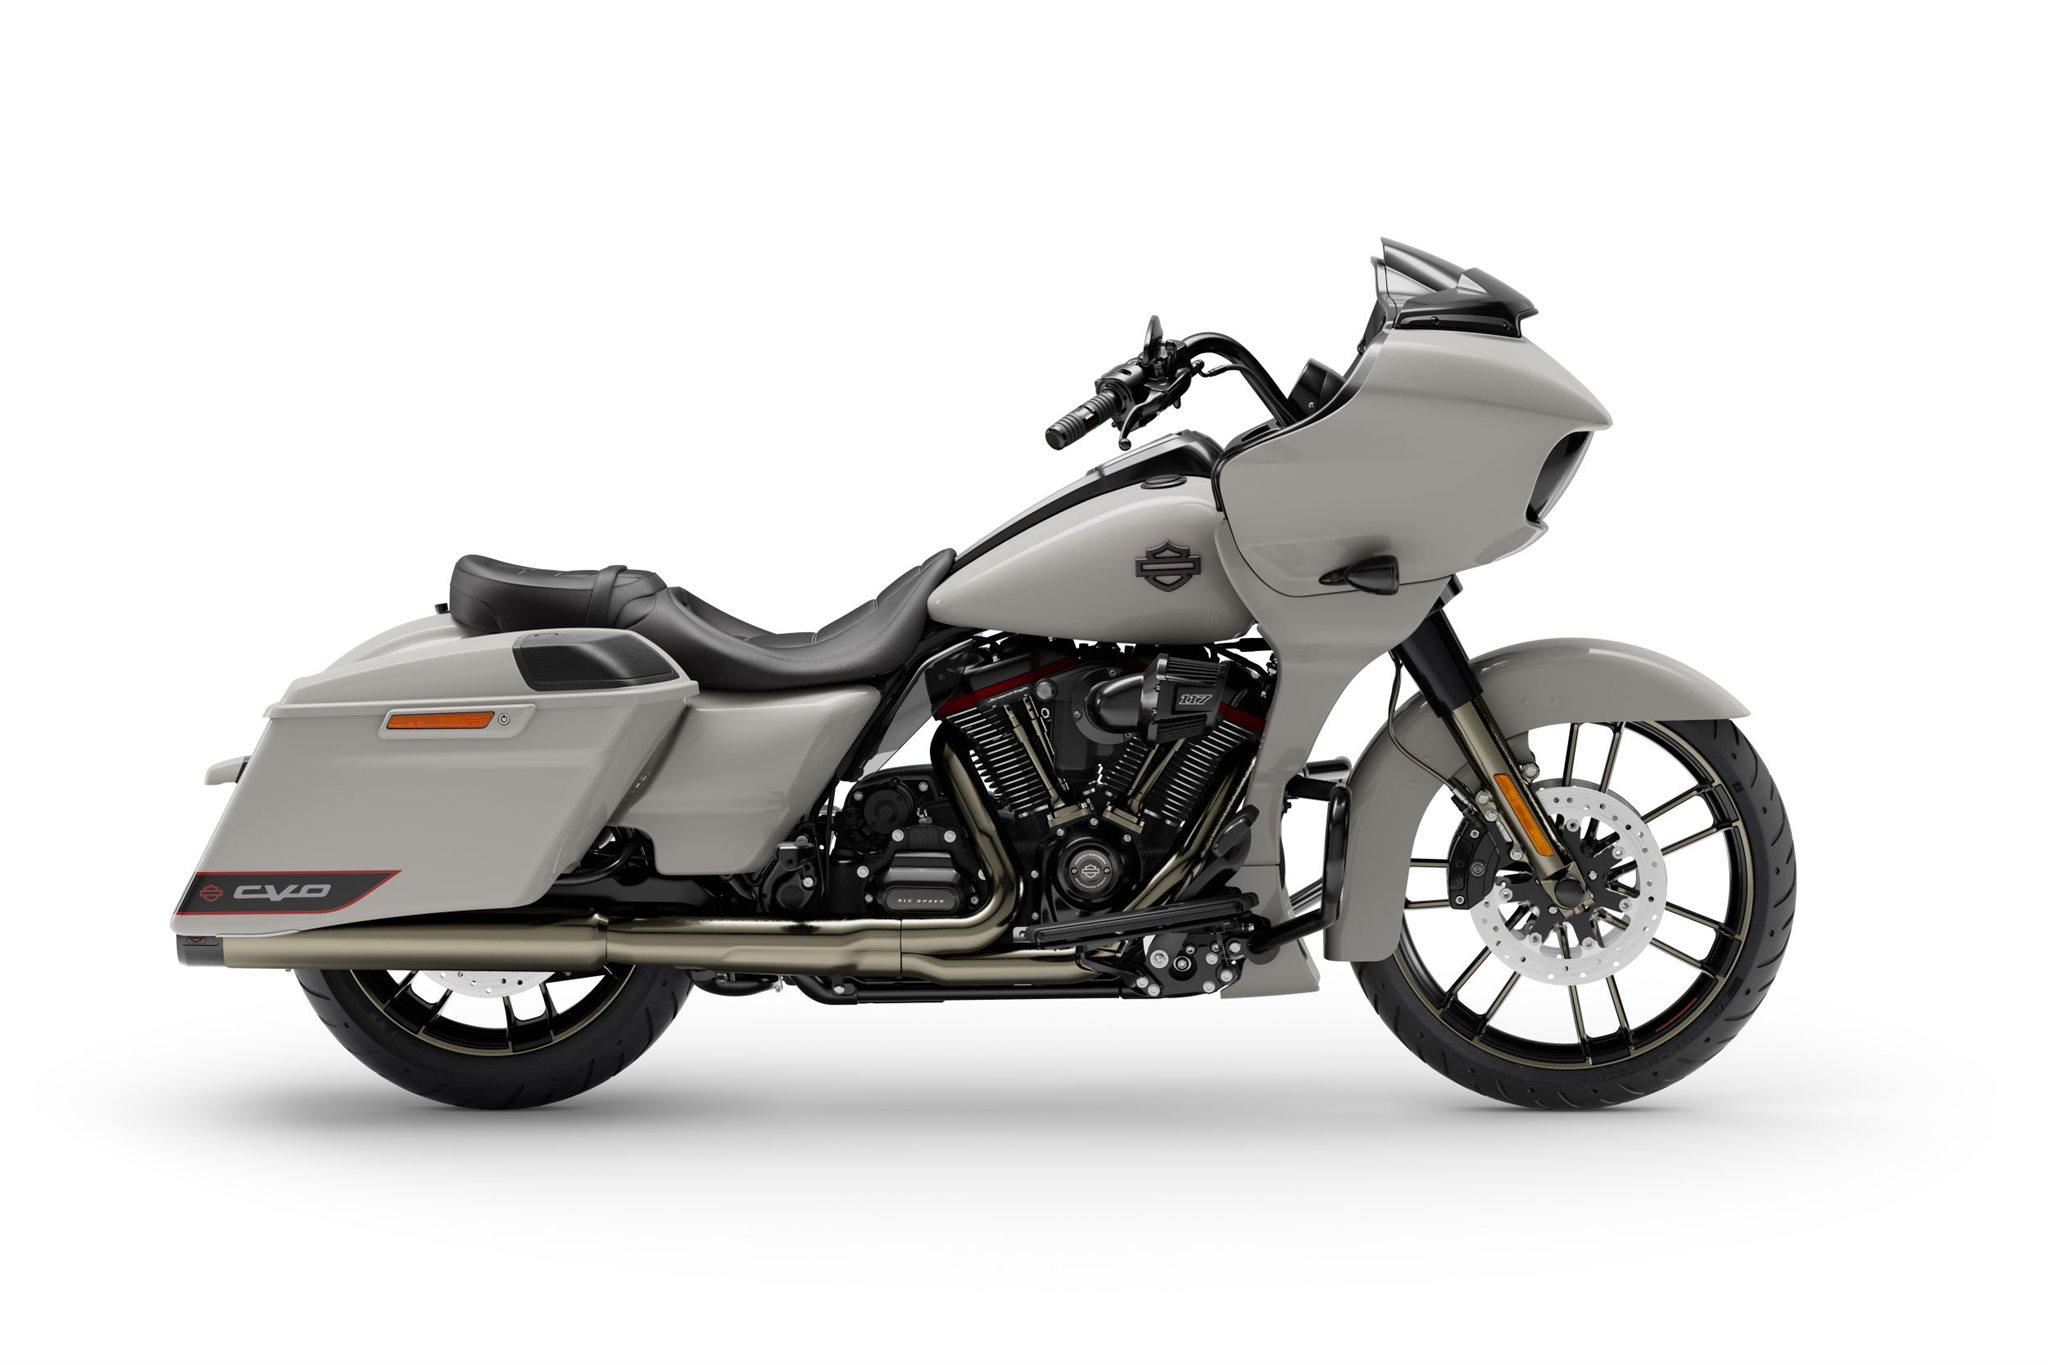 Motorrad Vergleich Harley Davidson Cvo Road Glide Fltrse 2020 Vs Harley Davidson Touring Road Glide Special Fltrxs 2021